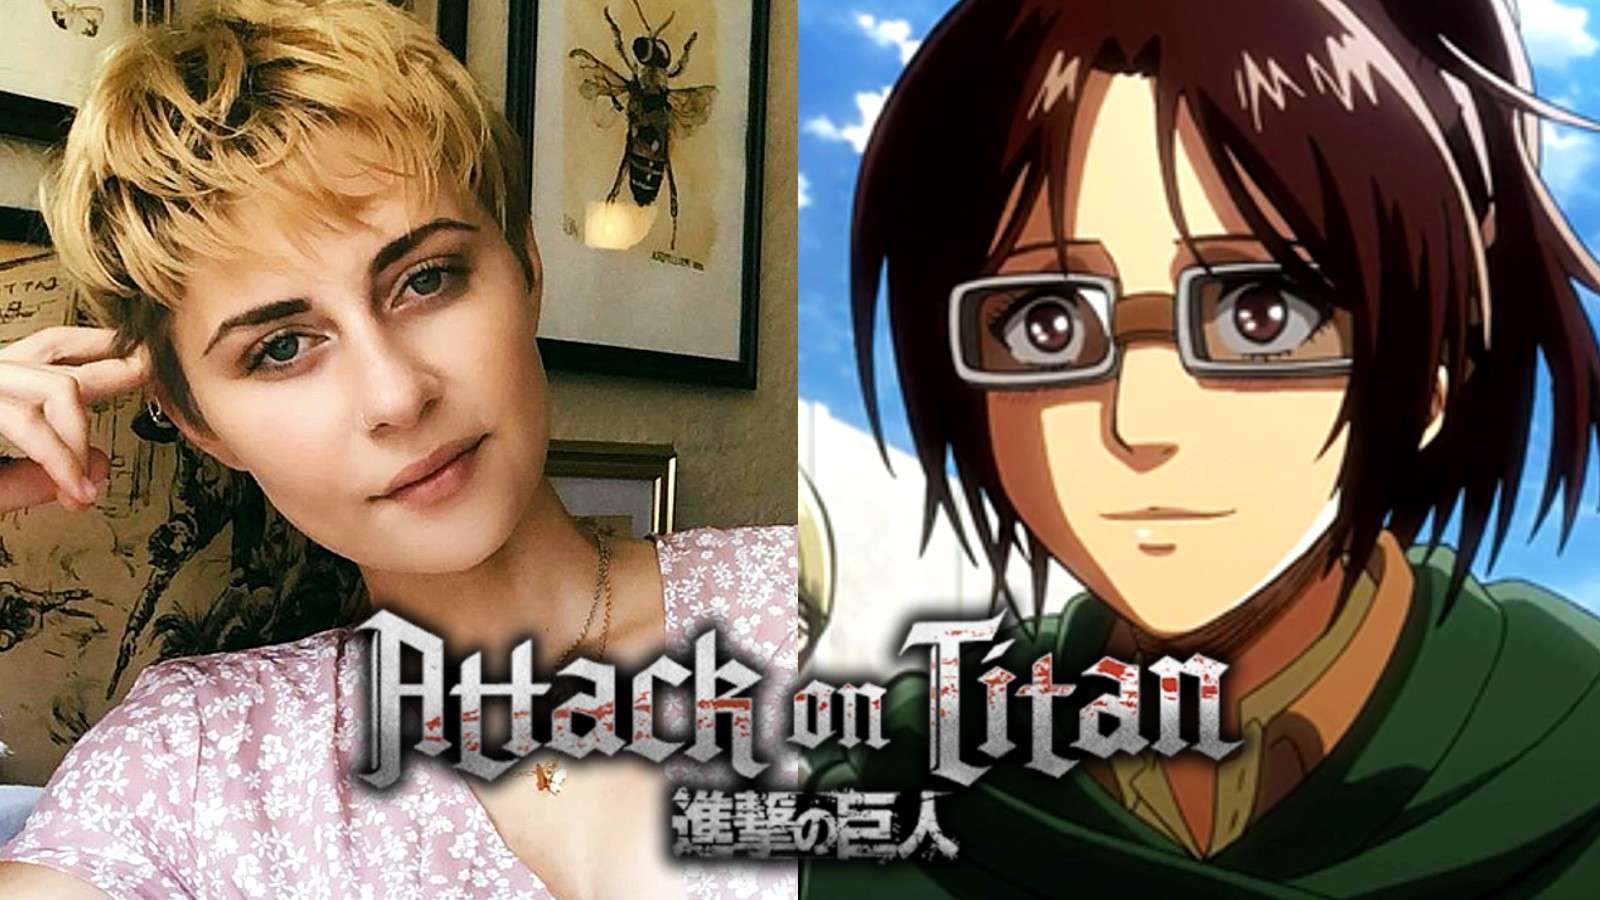 Attack of Titan Hanji cosplayer with AOT logo